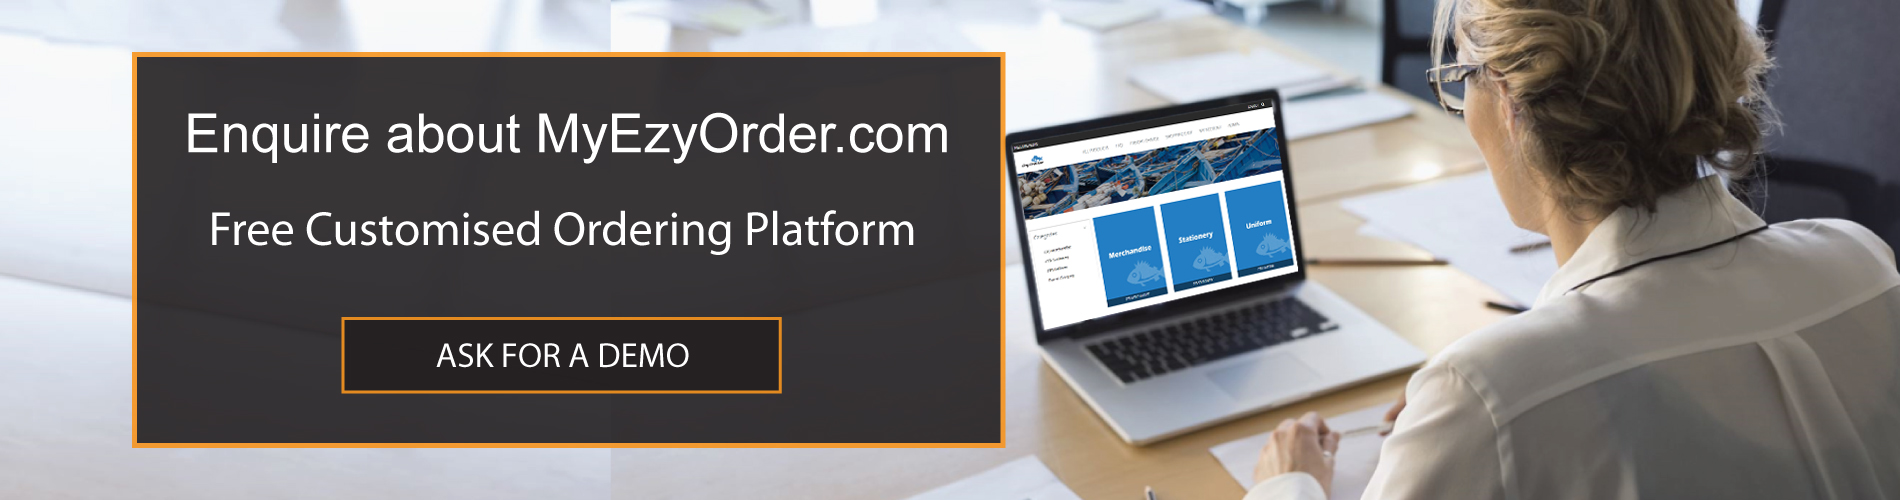 free customised ordering platform